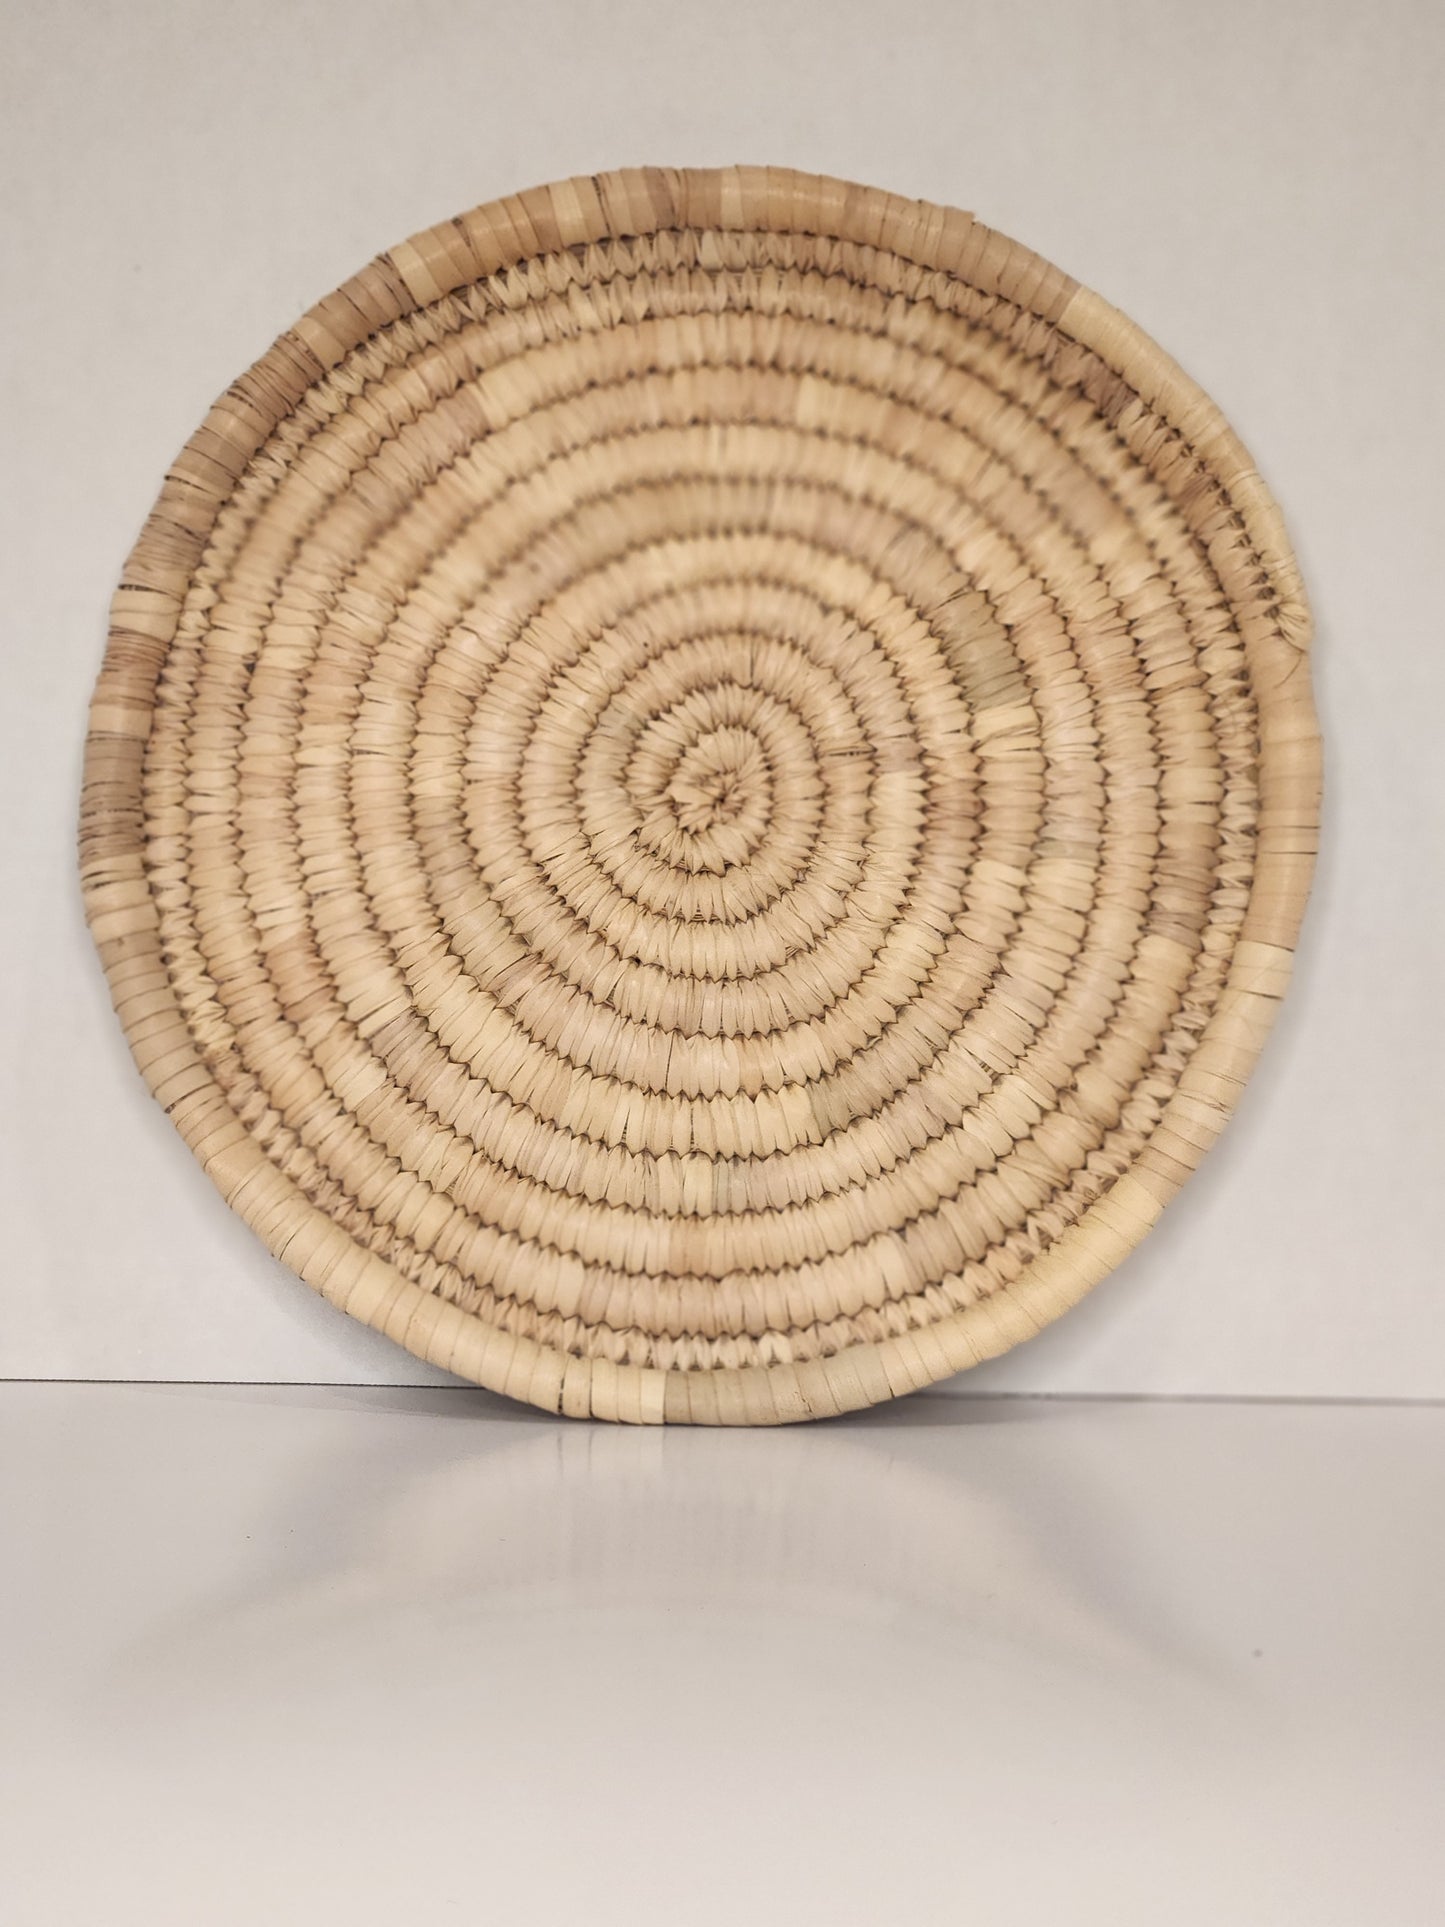 Fruit/Bread (palm) basket